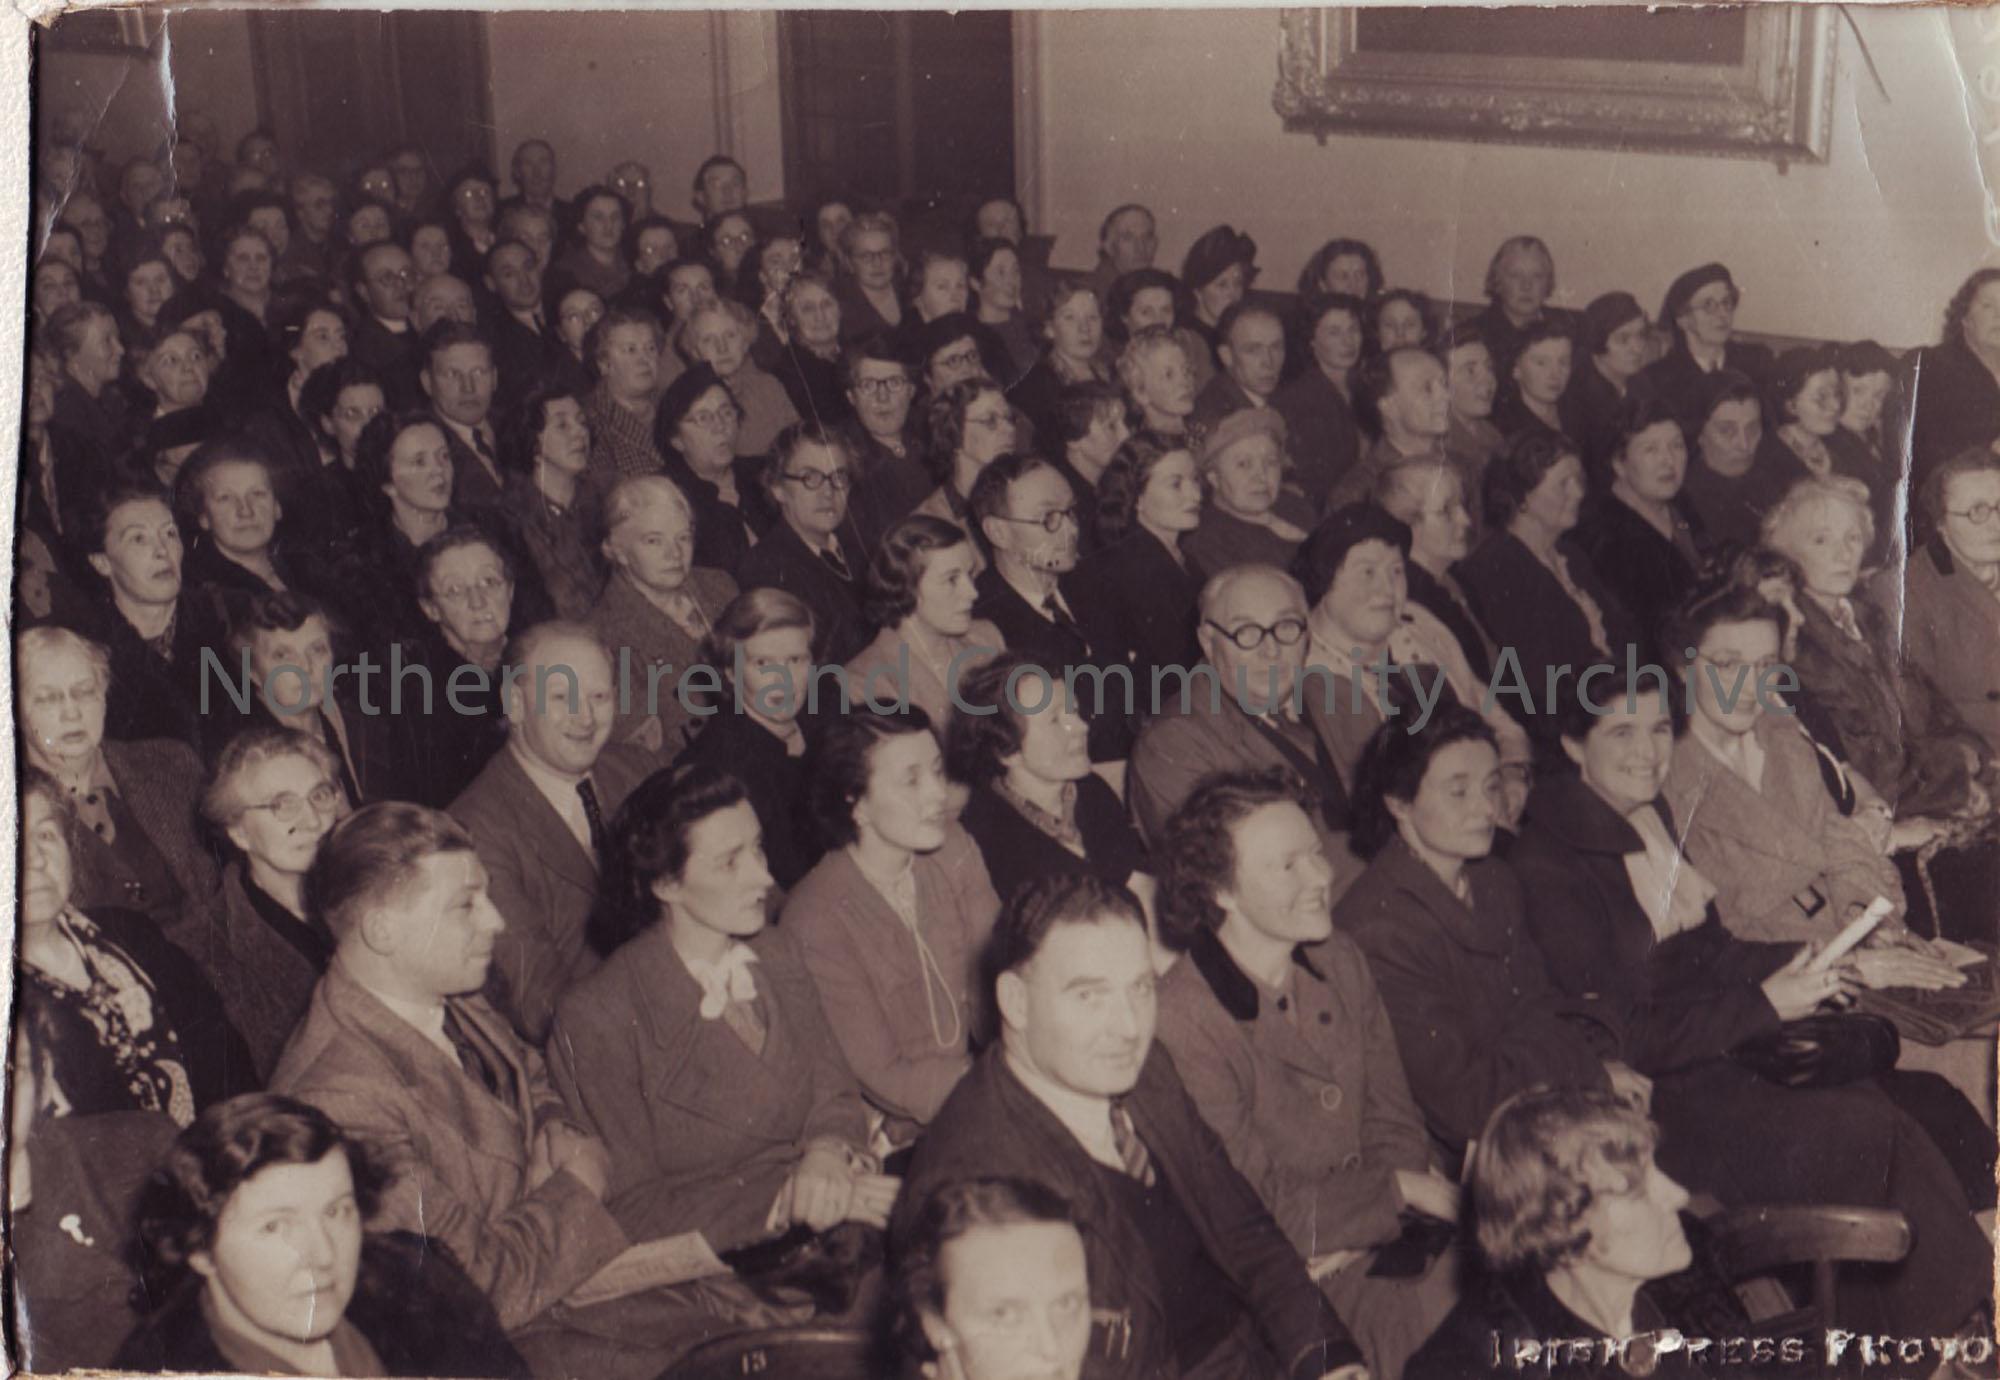 Photograph of the drama festival audience c. 1947- Irish press photograph